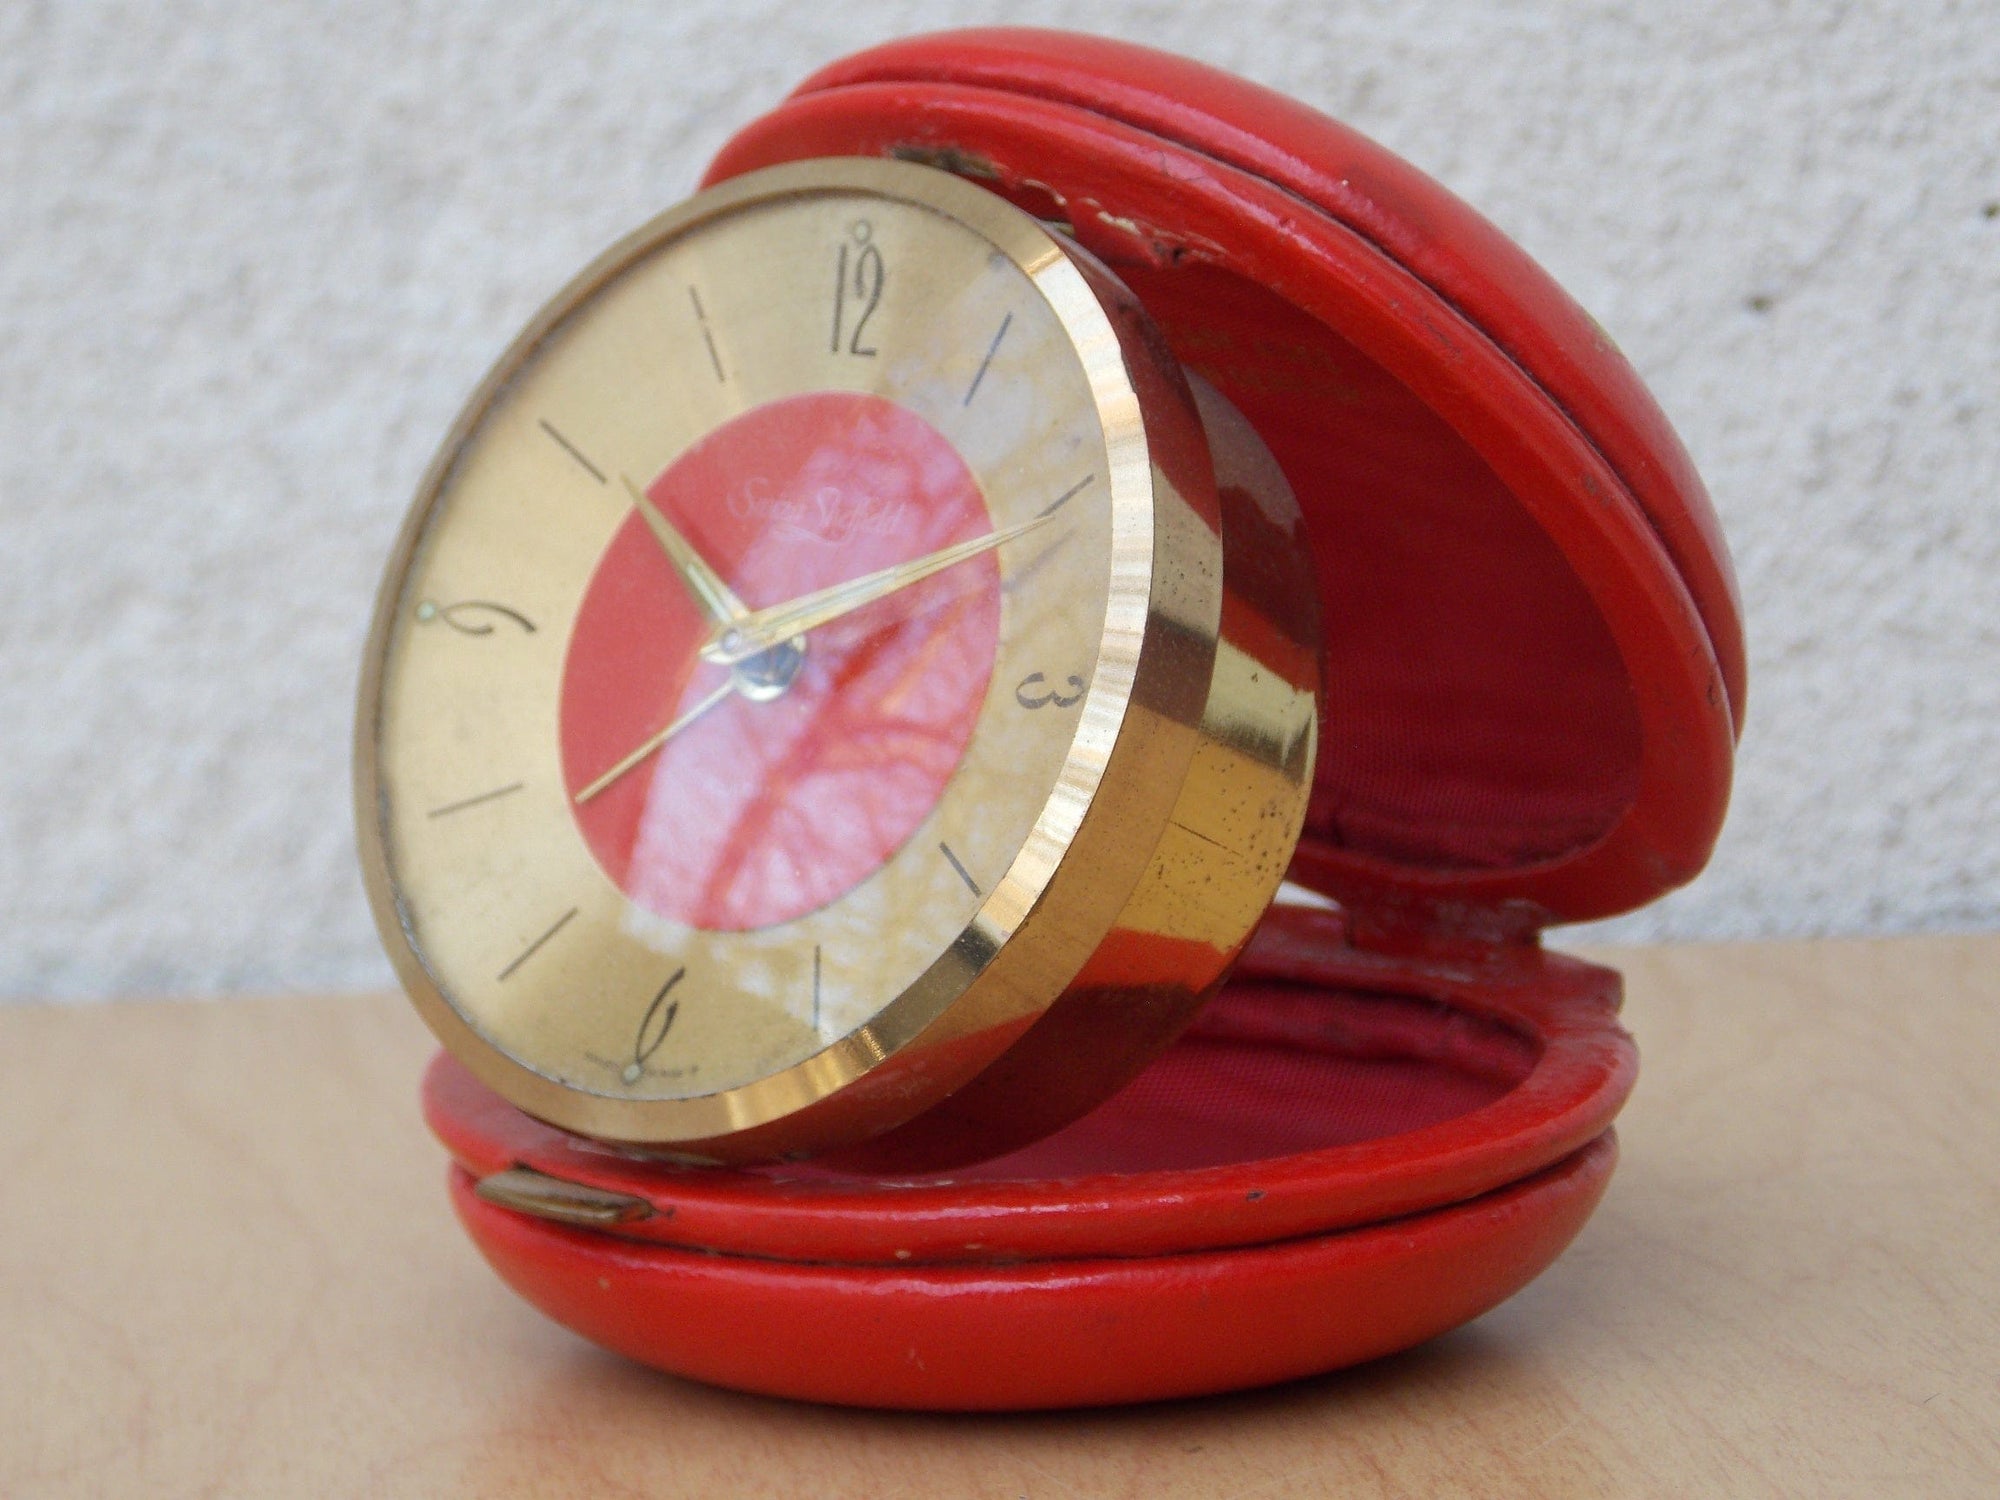 I Like Mike's Mid Century Modern Clock Swiza Sheifield Brass Red Leather Round Travel Clock, Wind Up